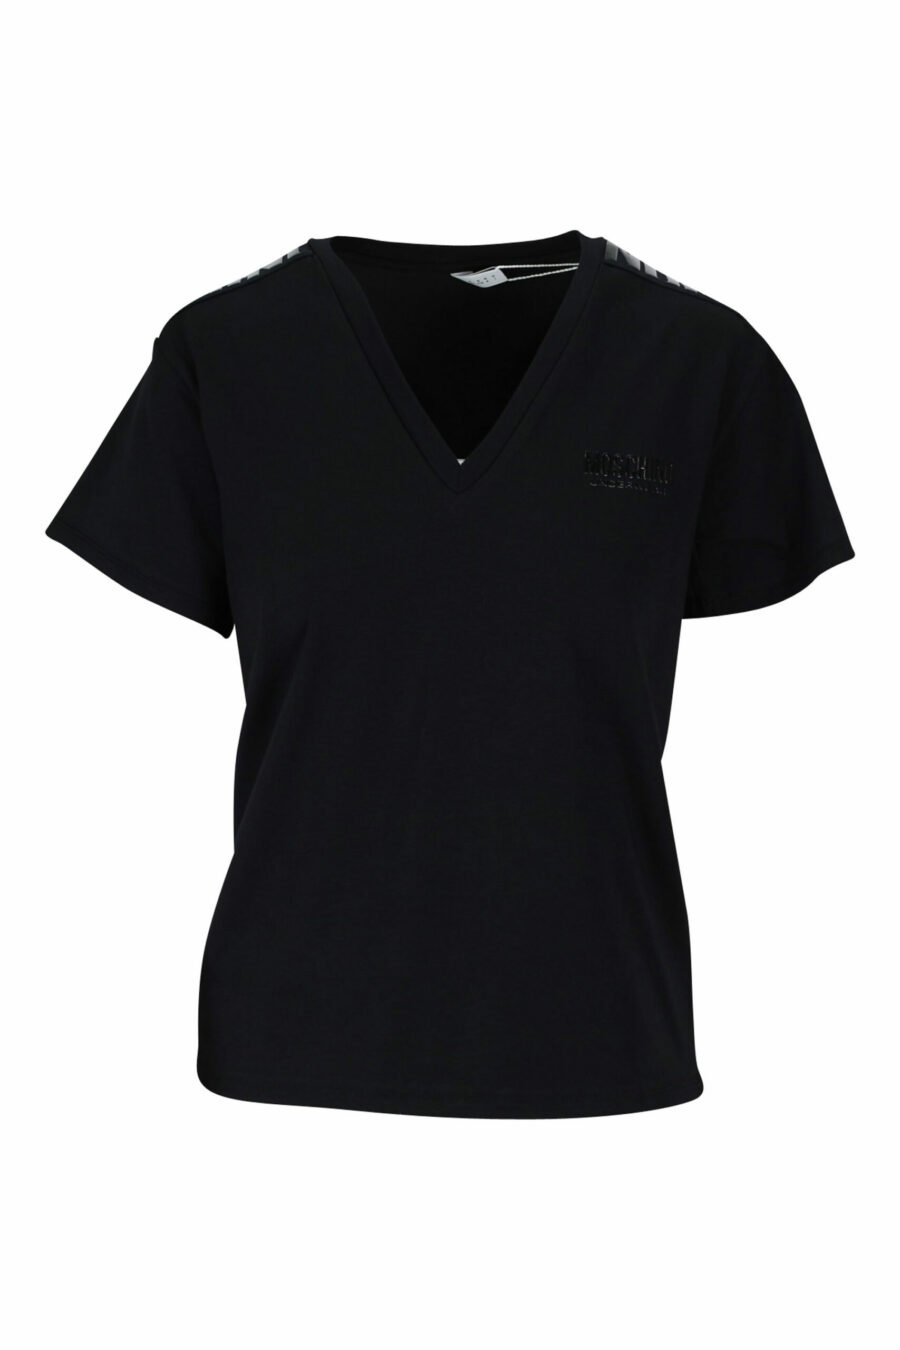 Black T-shirt with v-neck and monochrome ribbon logo - 889316614954 scaled